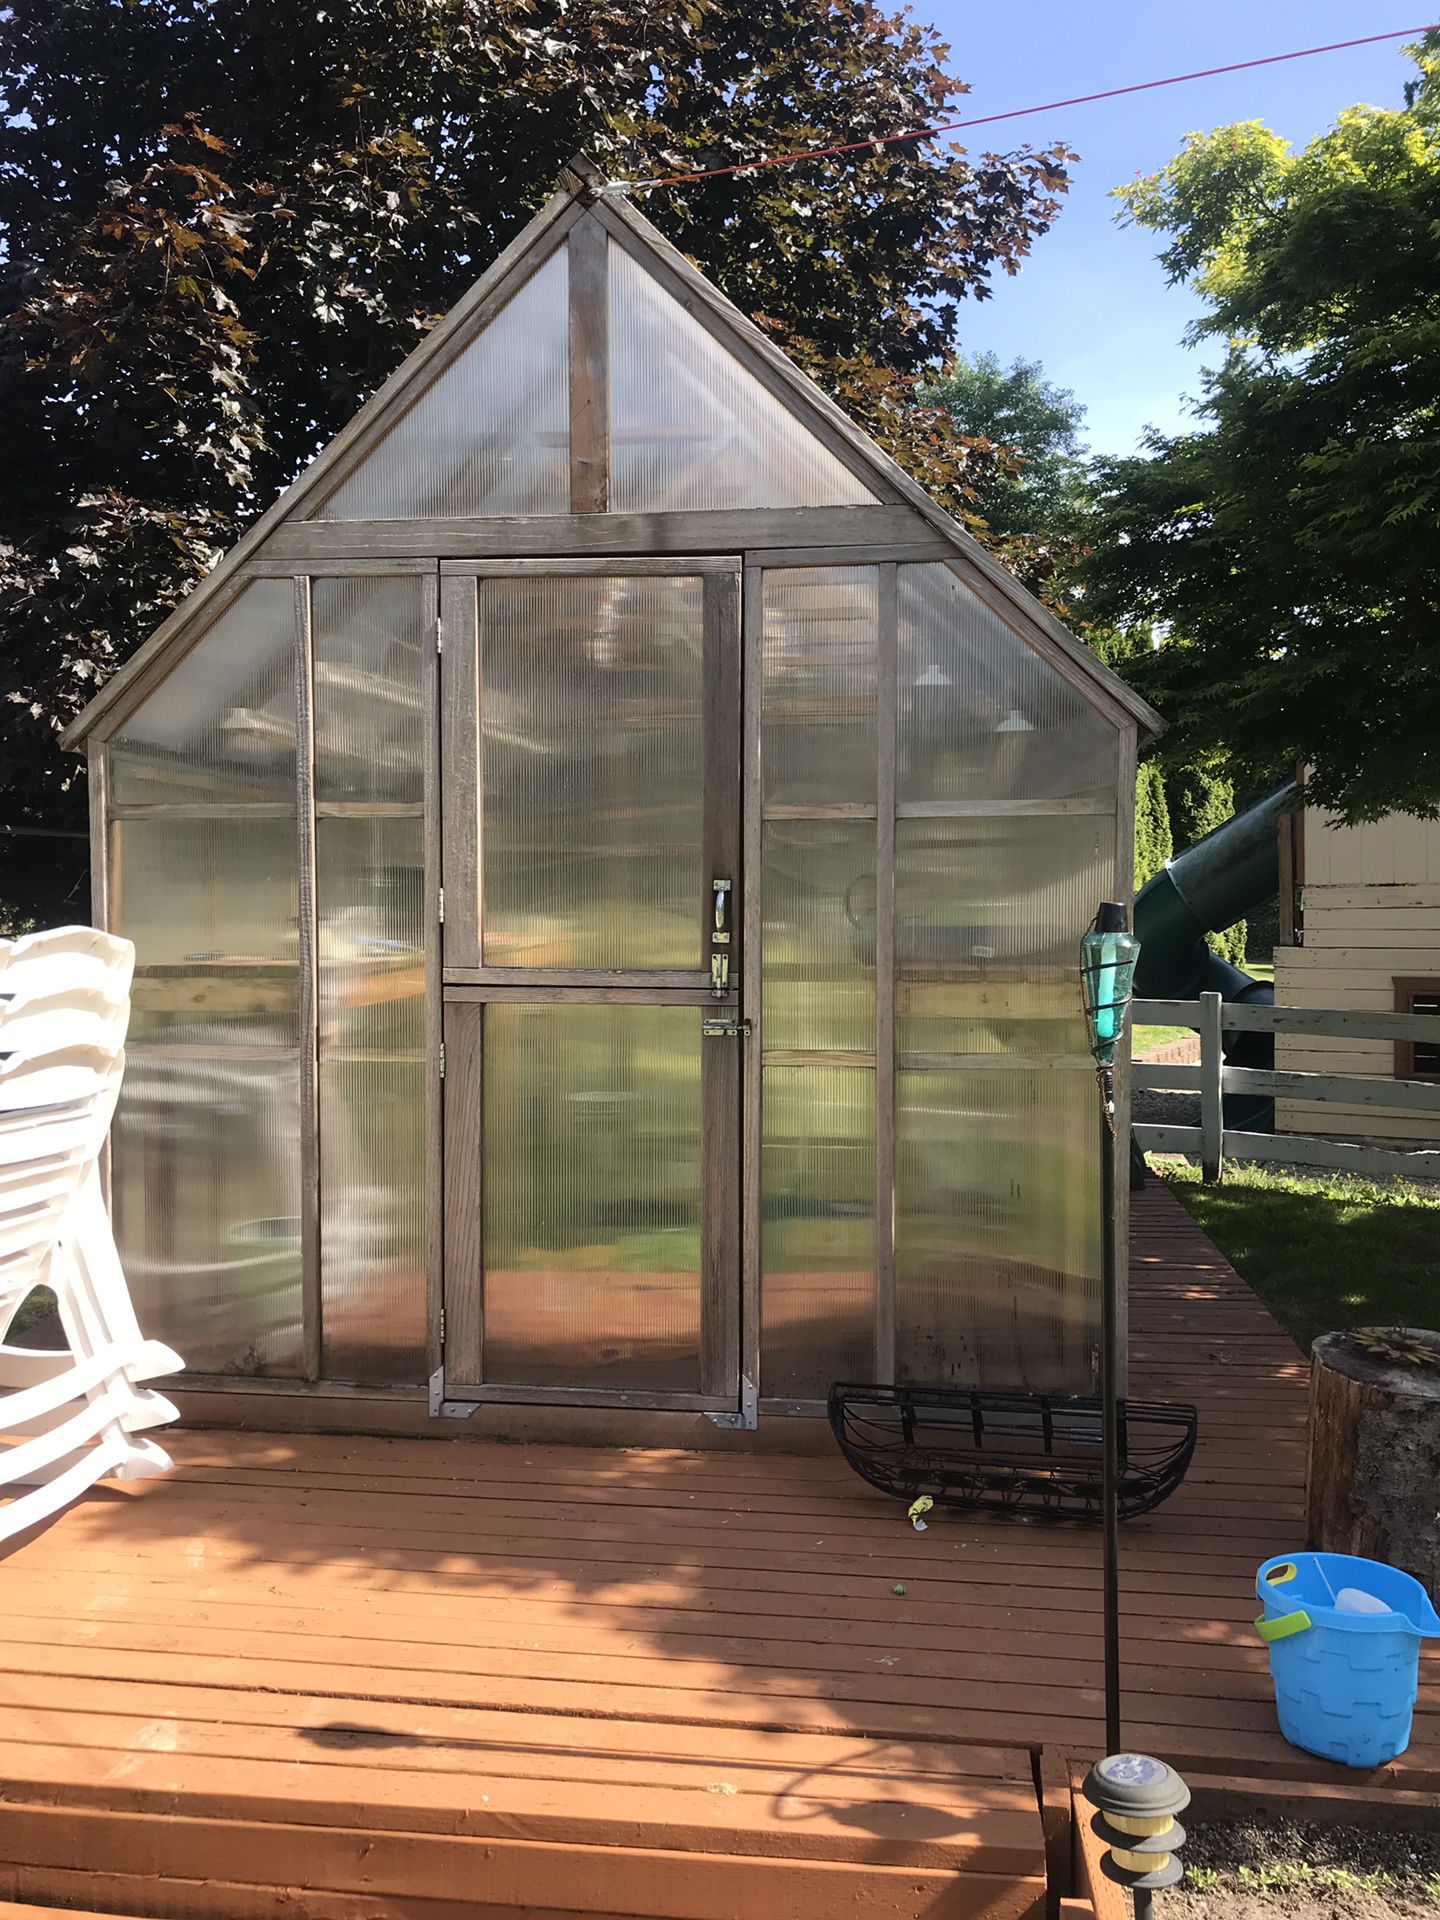 Greenhouse. Make offer